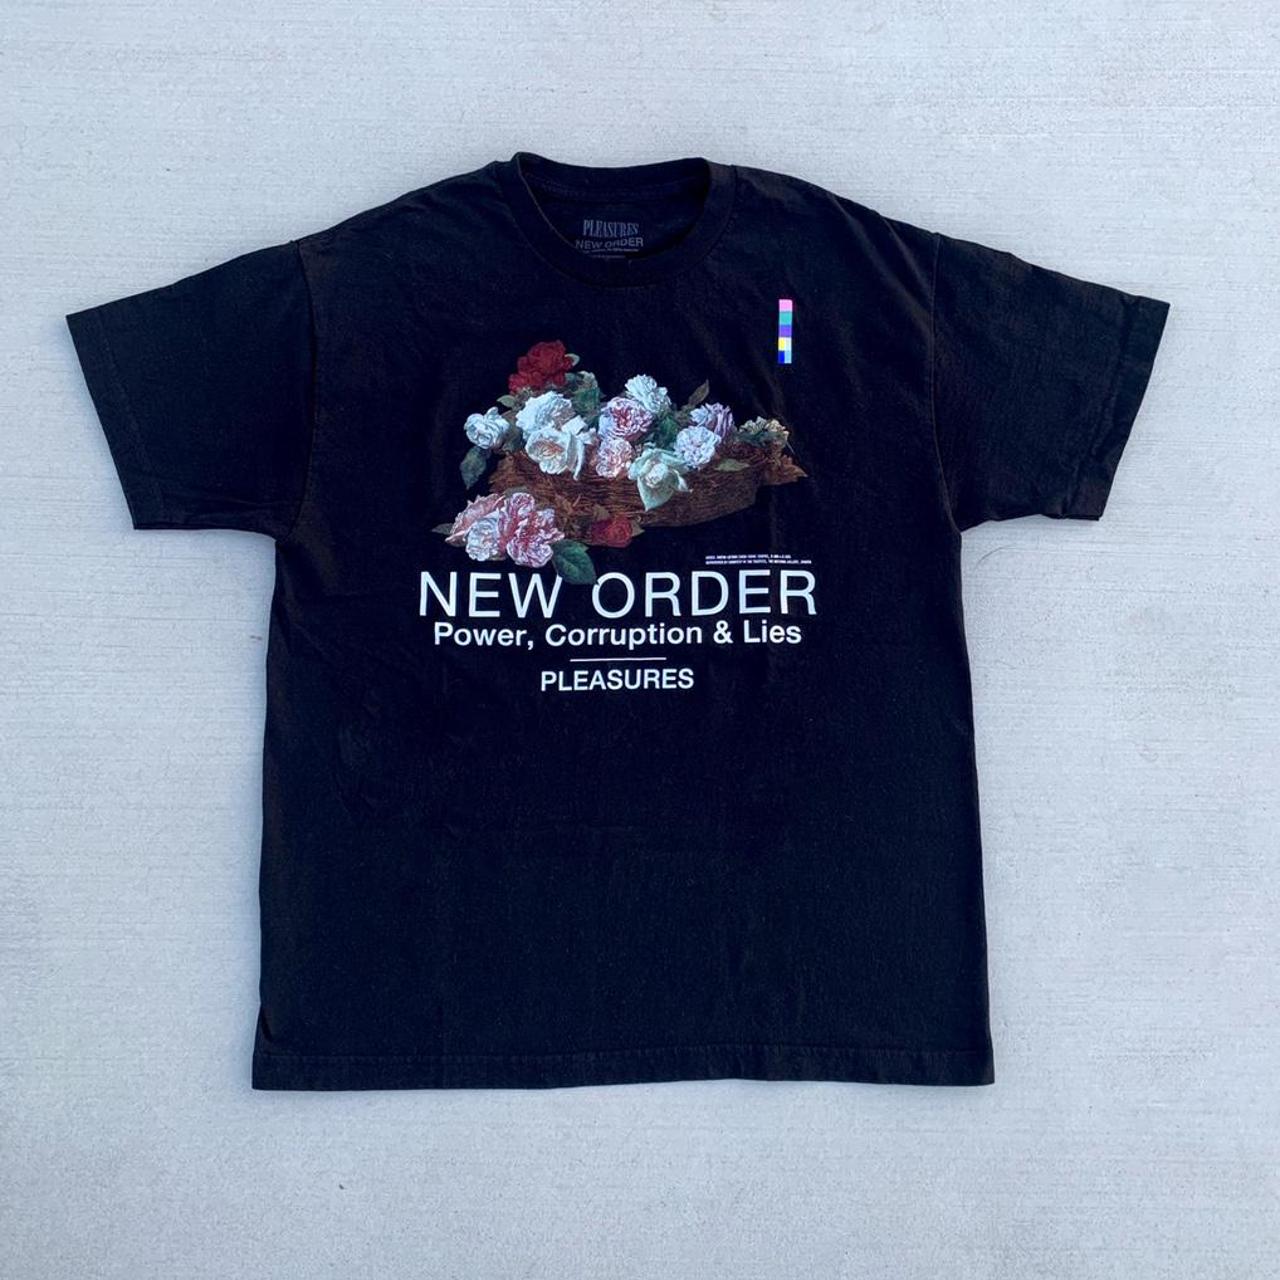 Product Image 1 - Pleasures New Order T-shirt
Power, Corruption